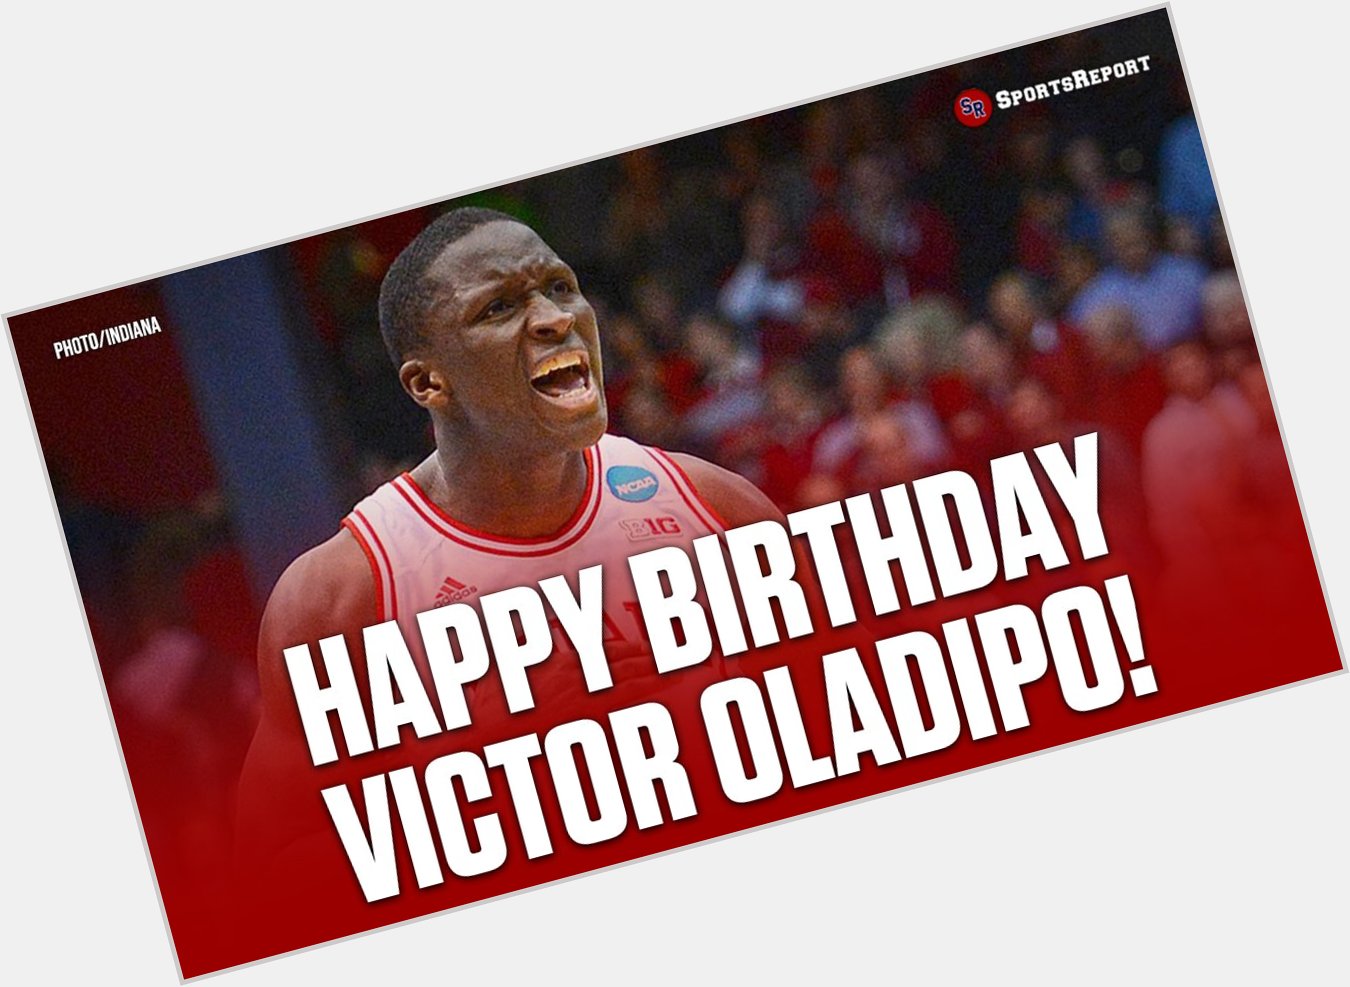  Fans, let\s wish Victor Oladipo a Happy Birthday!! 